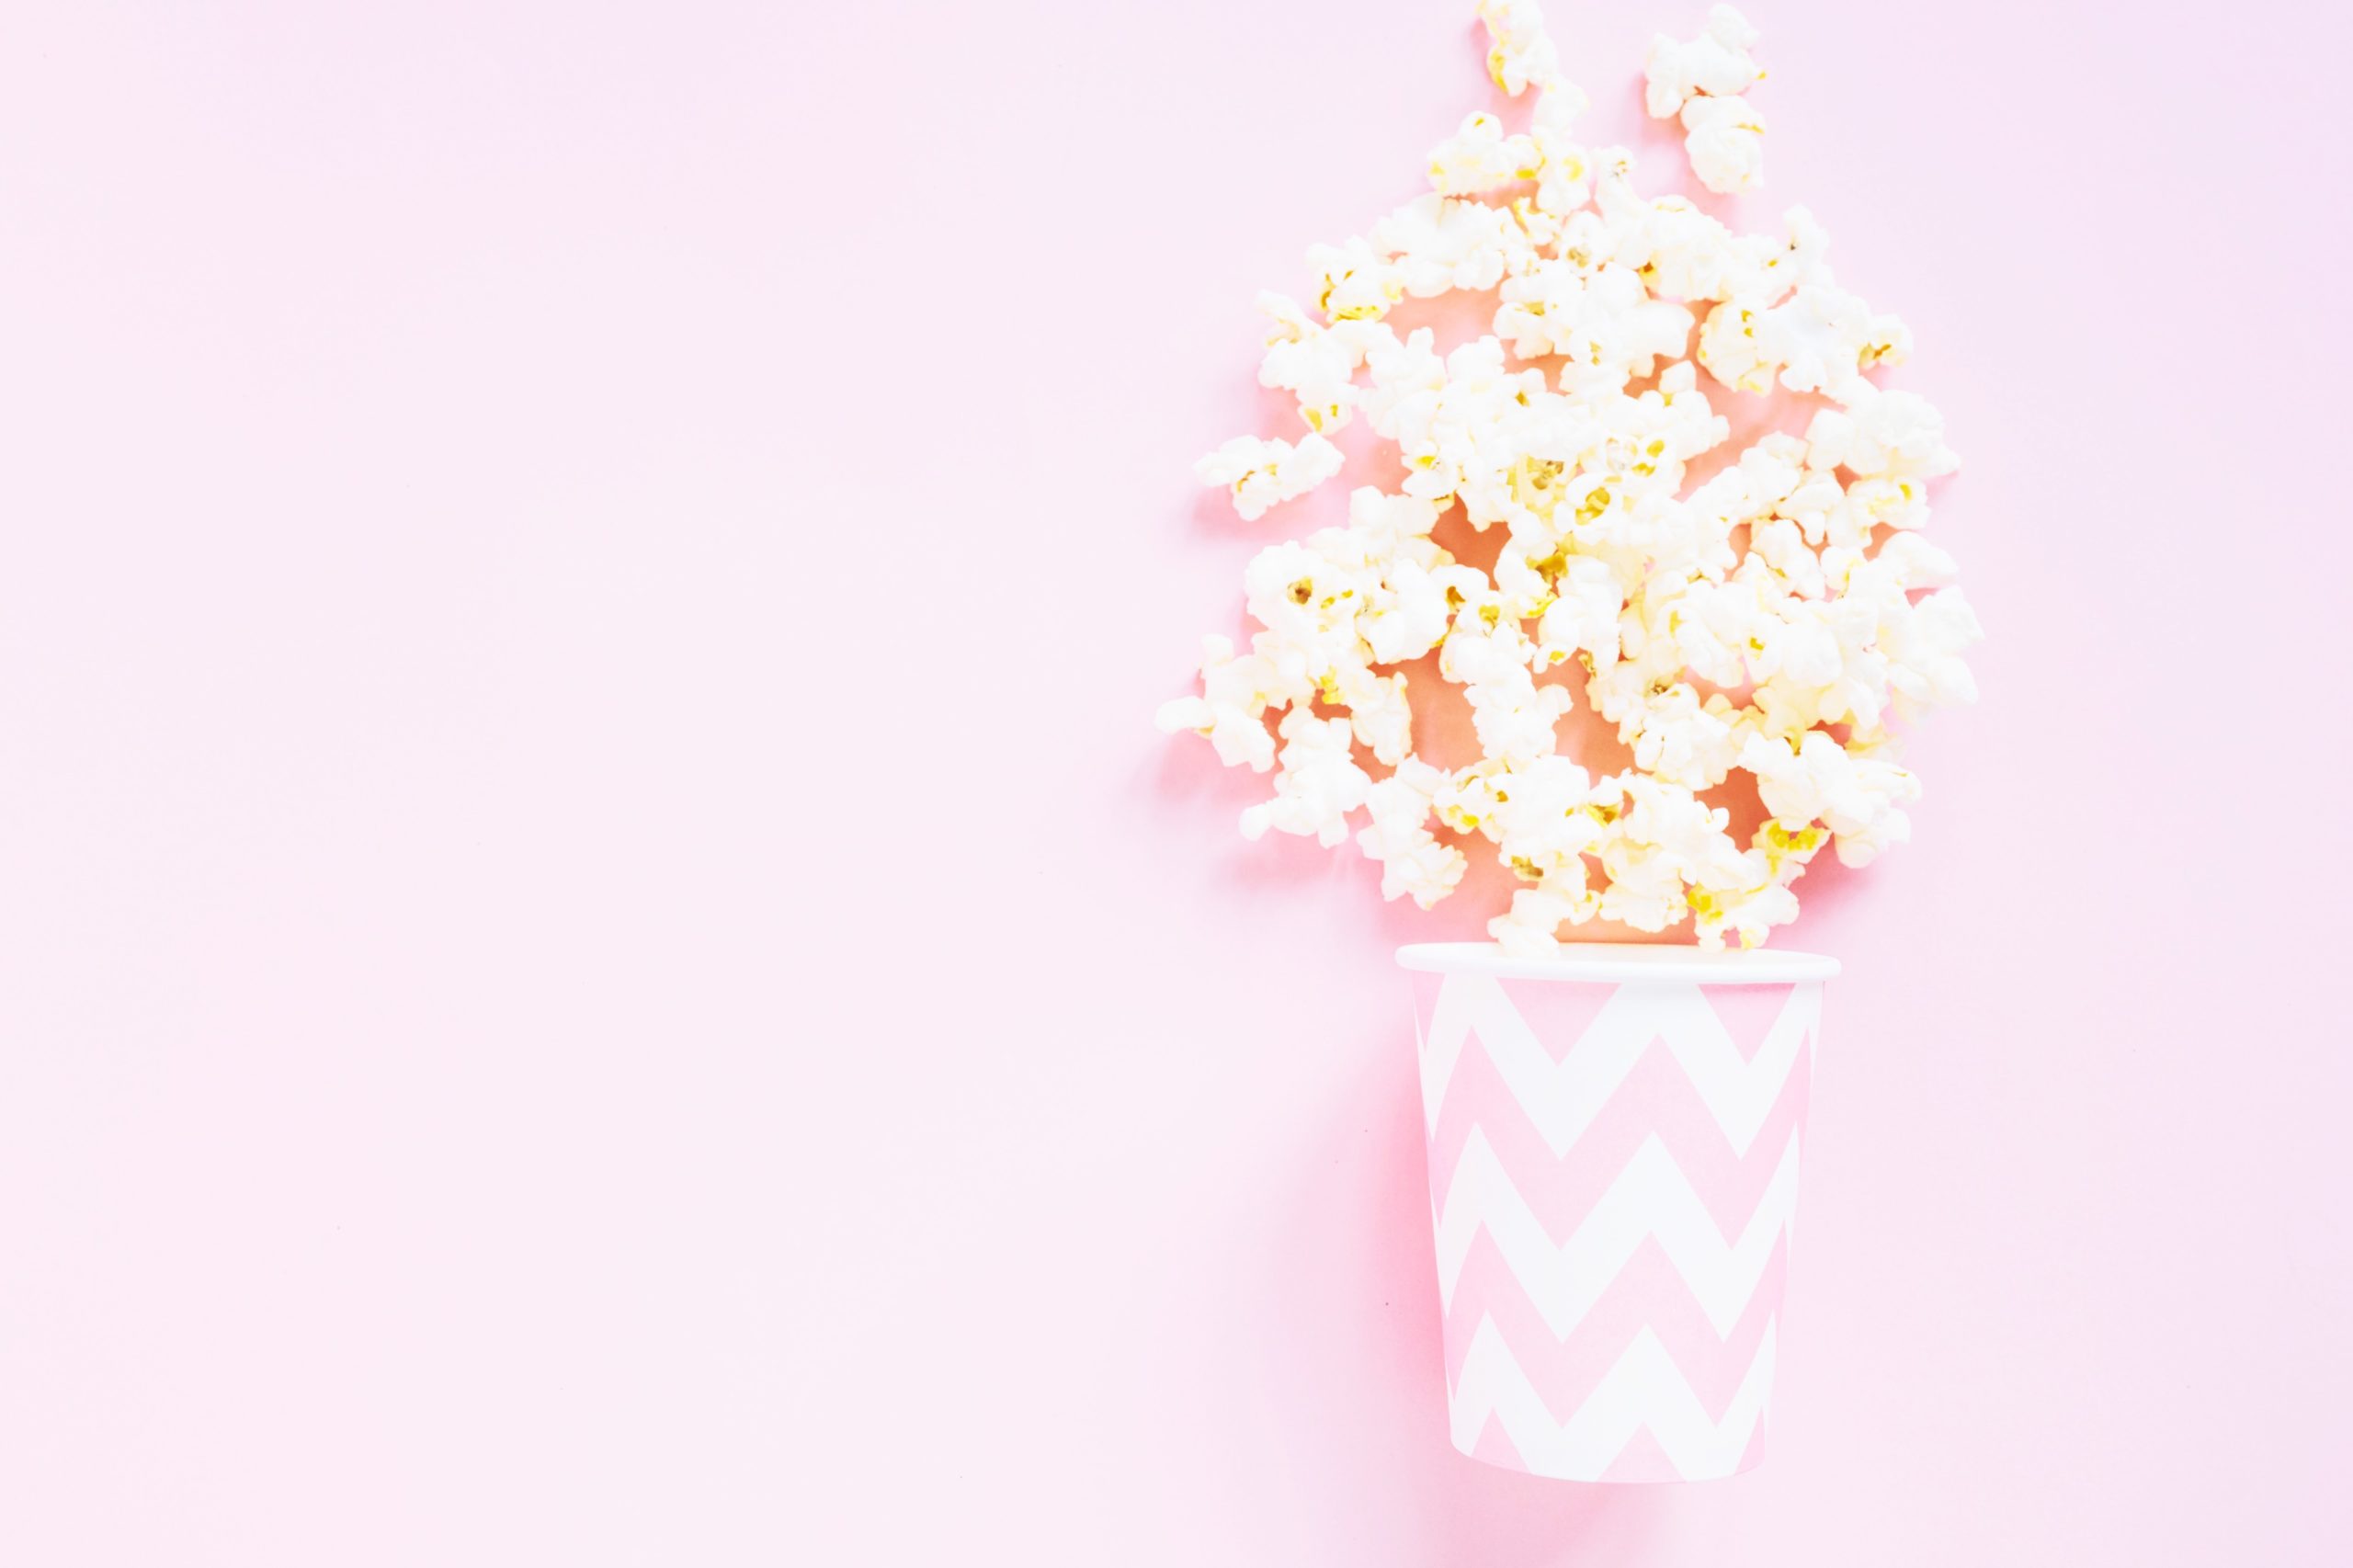 <img src="pink.jpg" alt="pink popcorn bucket"/> 